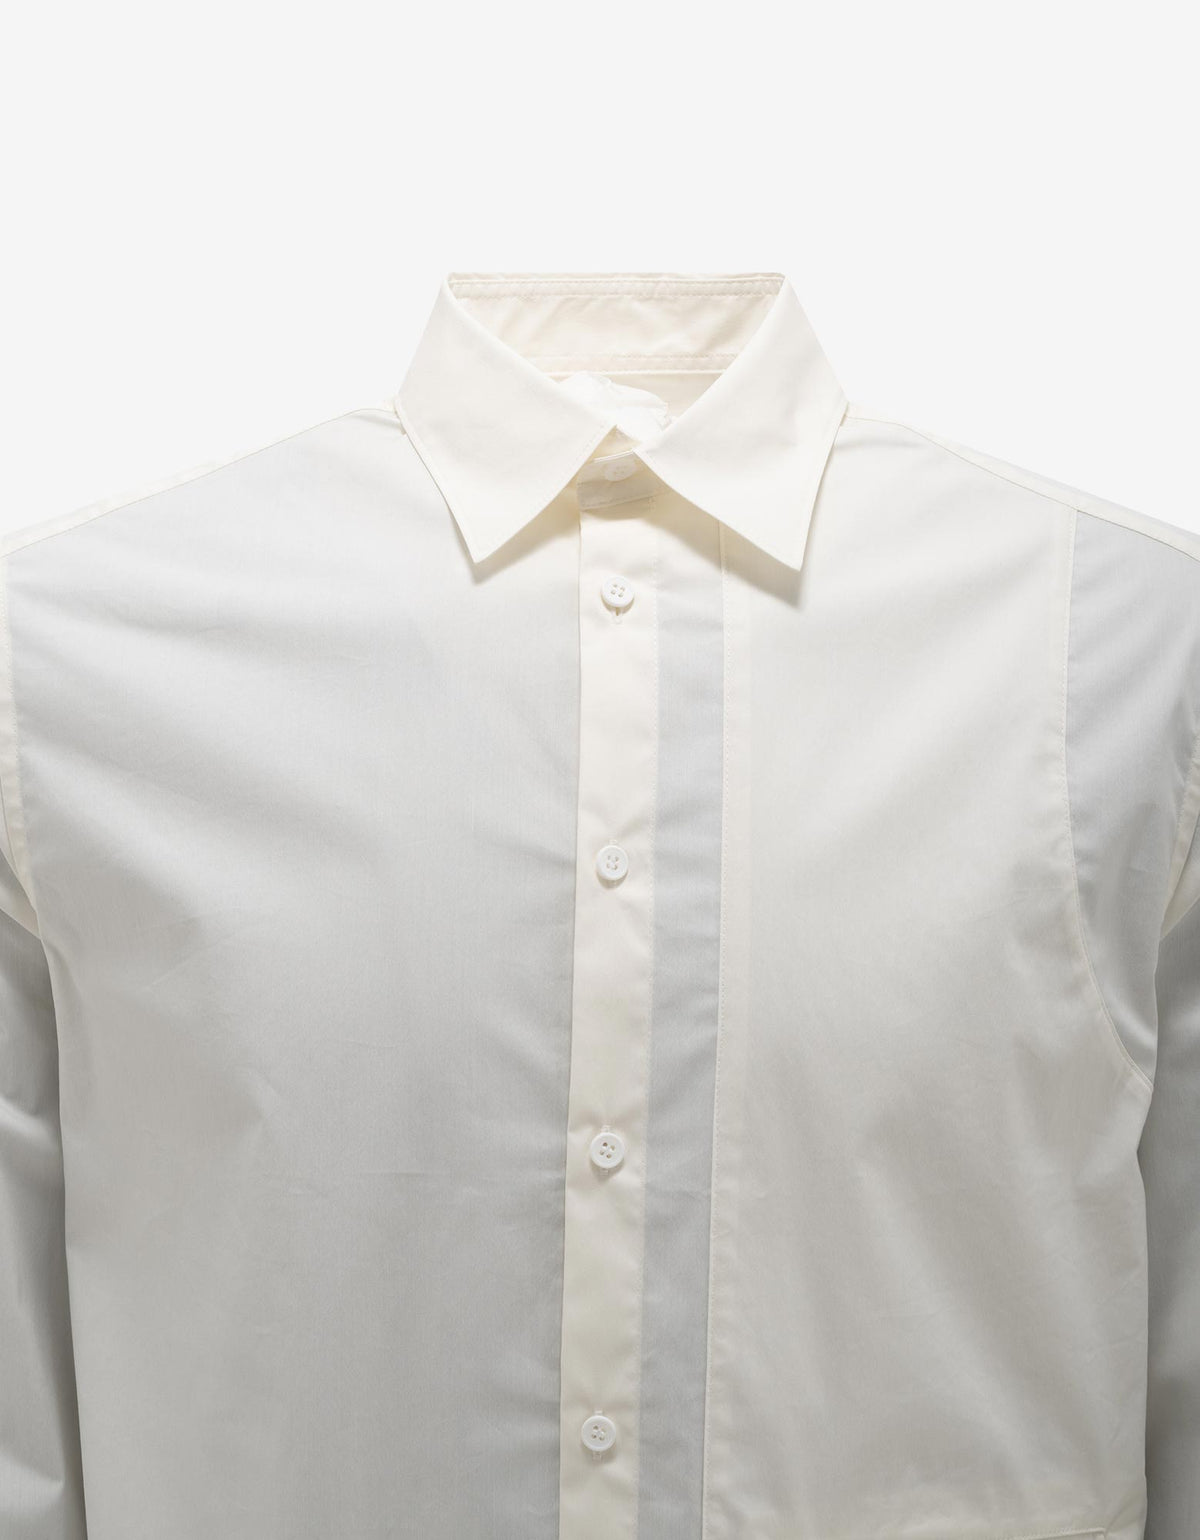 Y-3 Off White Pocket Shirt